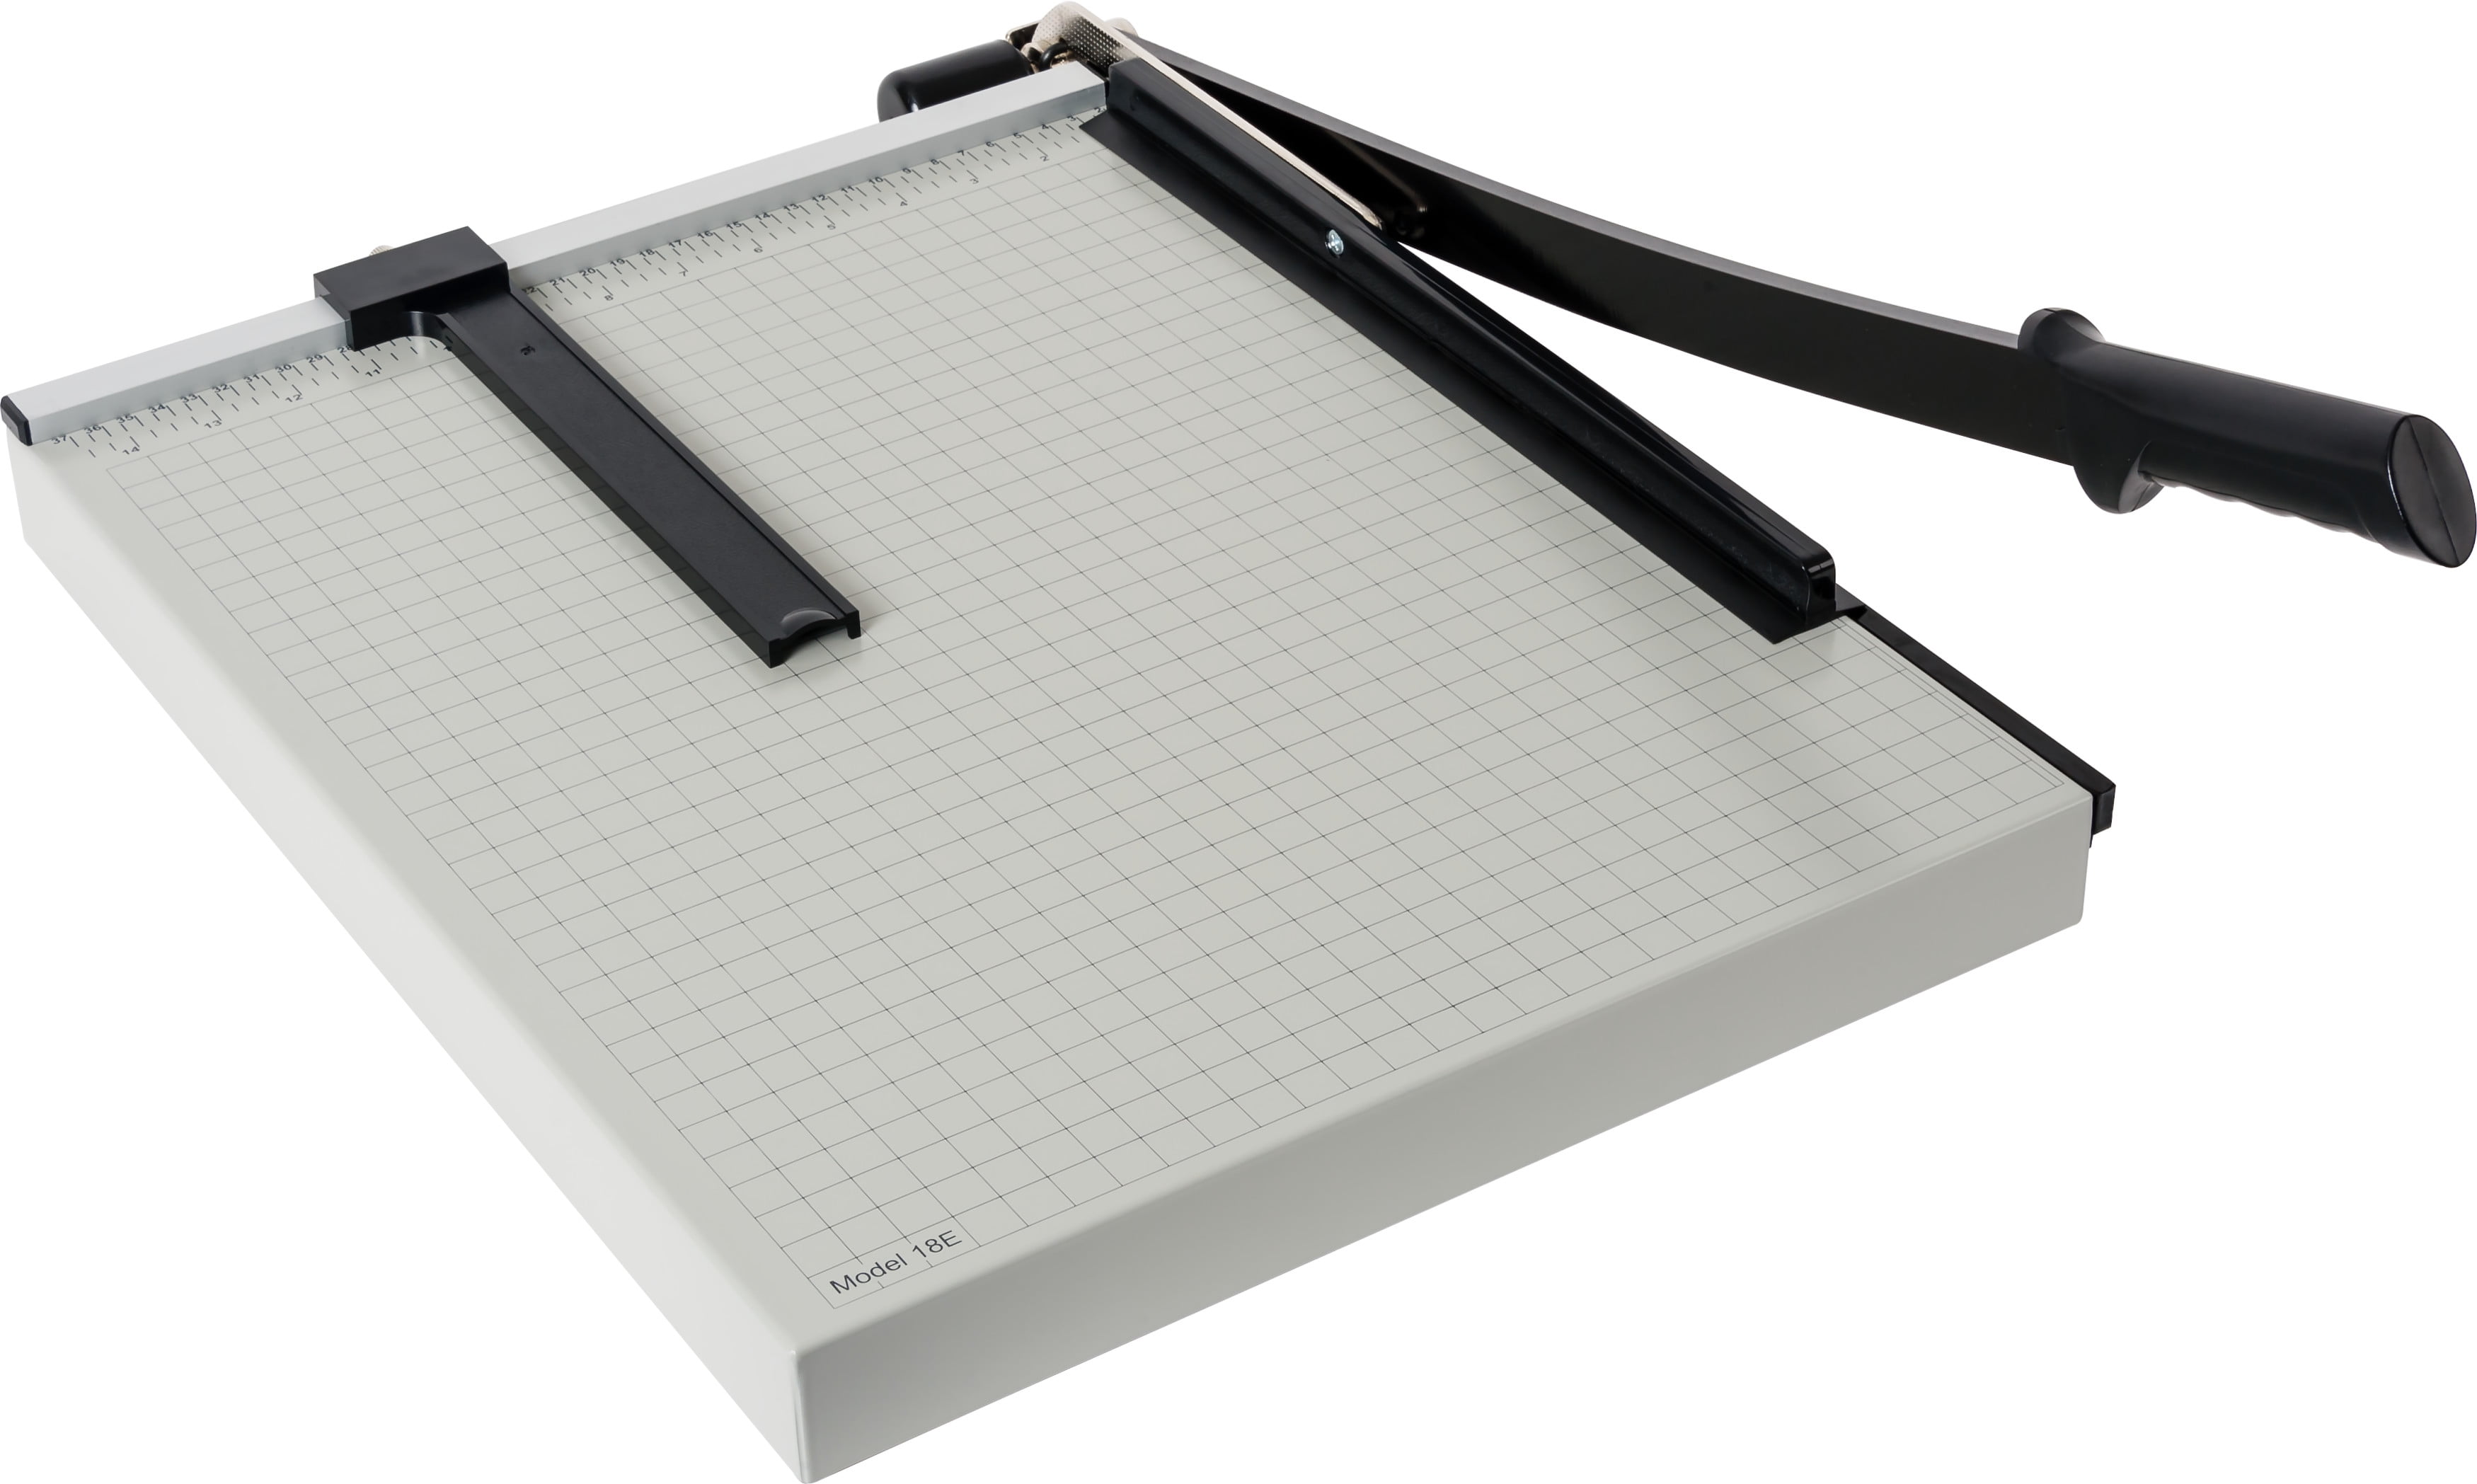 DAHLE MODEL 534 Professional 18 Inch Guillotine Paper Cutter - New In Box  $50.00 - PicClick